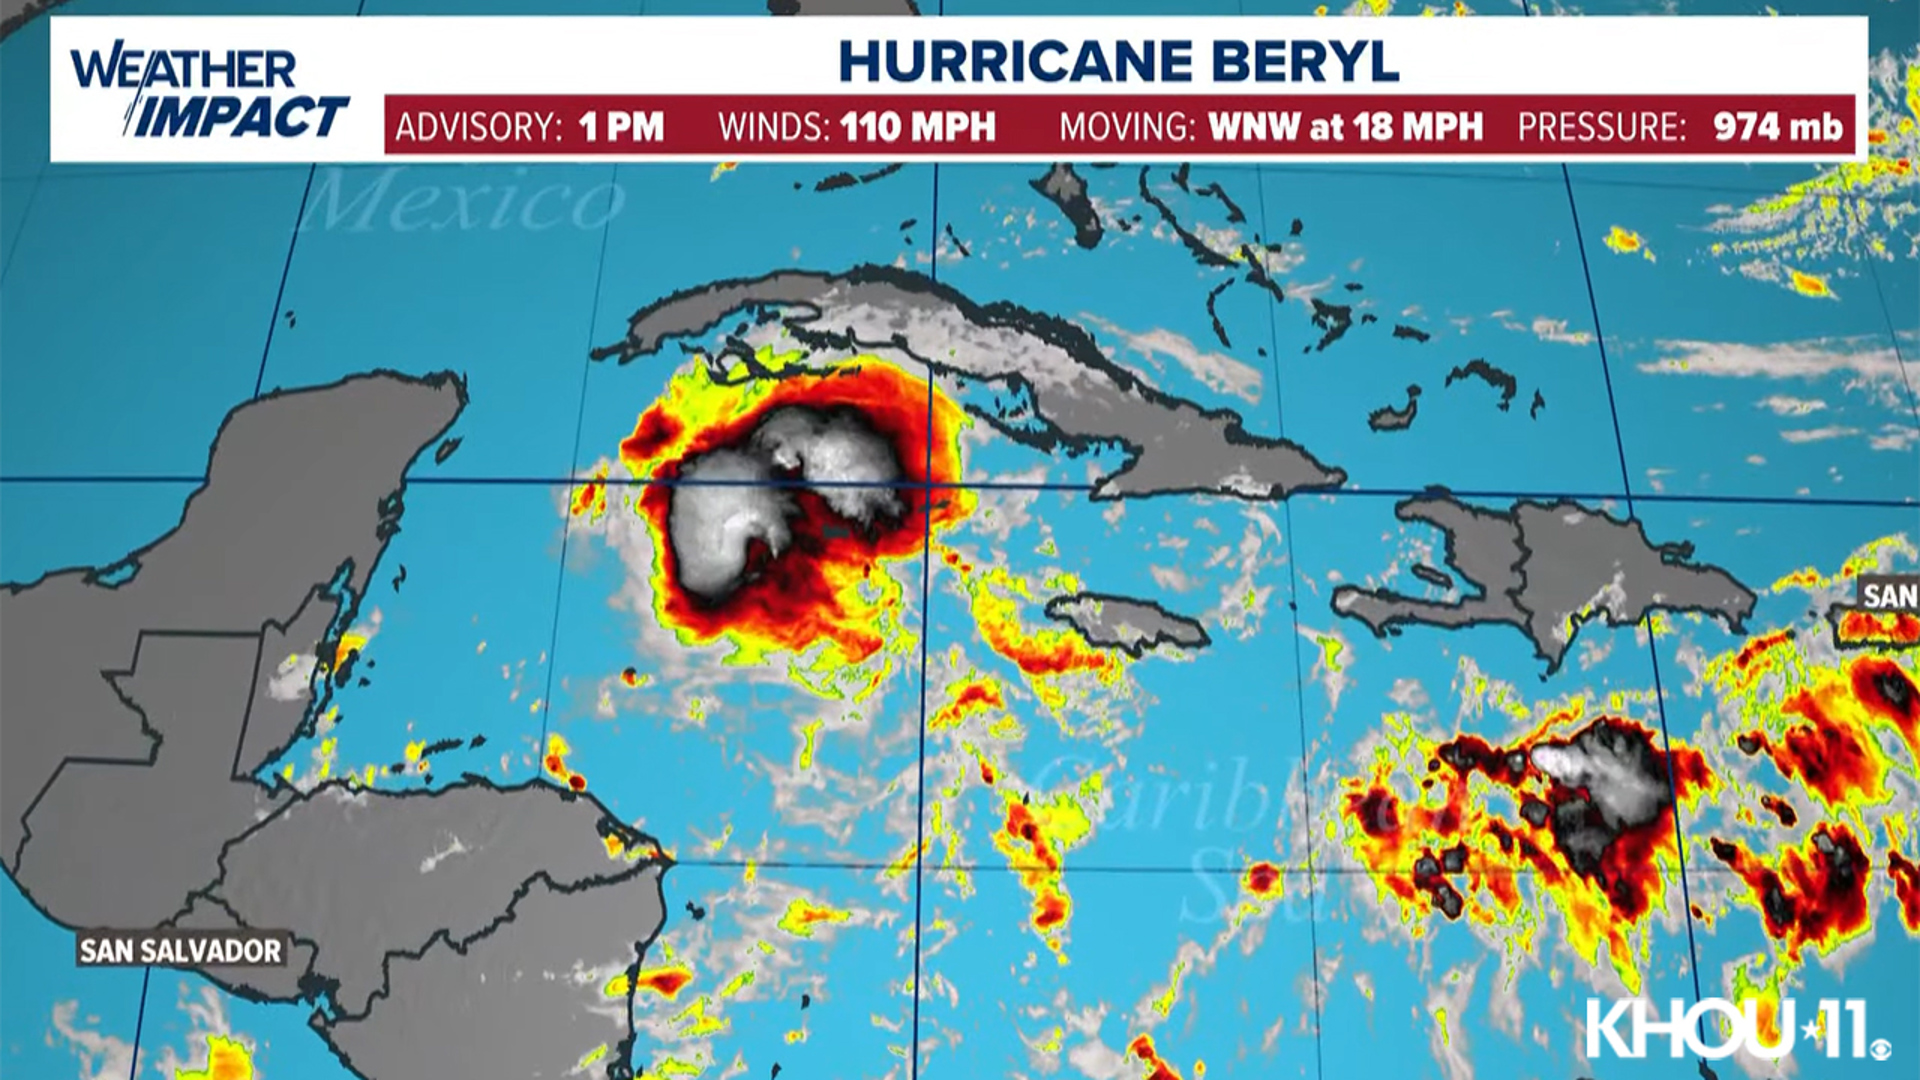 After indirectly hitting Jamaica, Hurricane Beryl is continuing on its track toward the Yucatán Peninsula. Track Hurricane Beryl live.